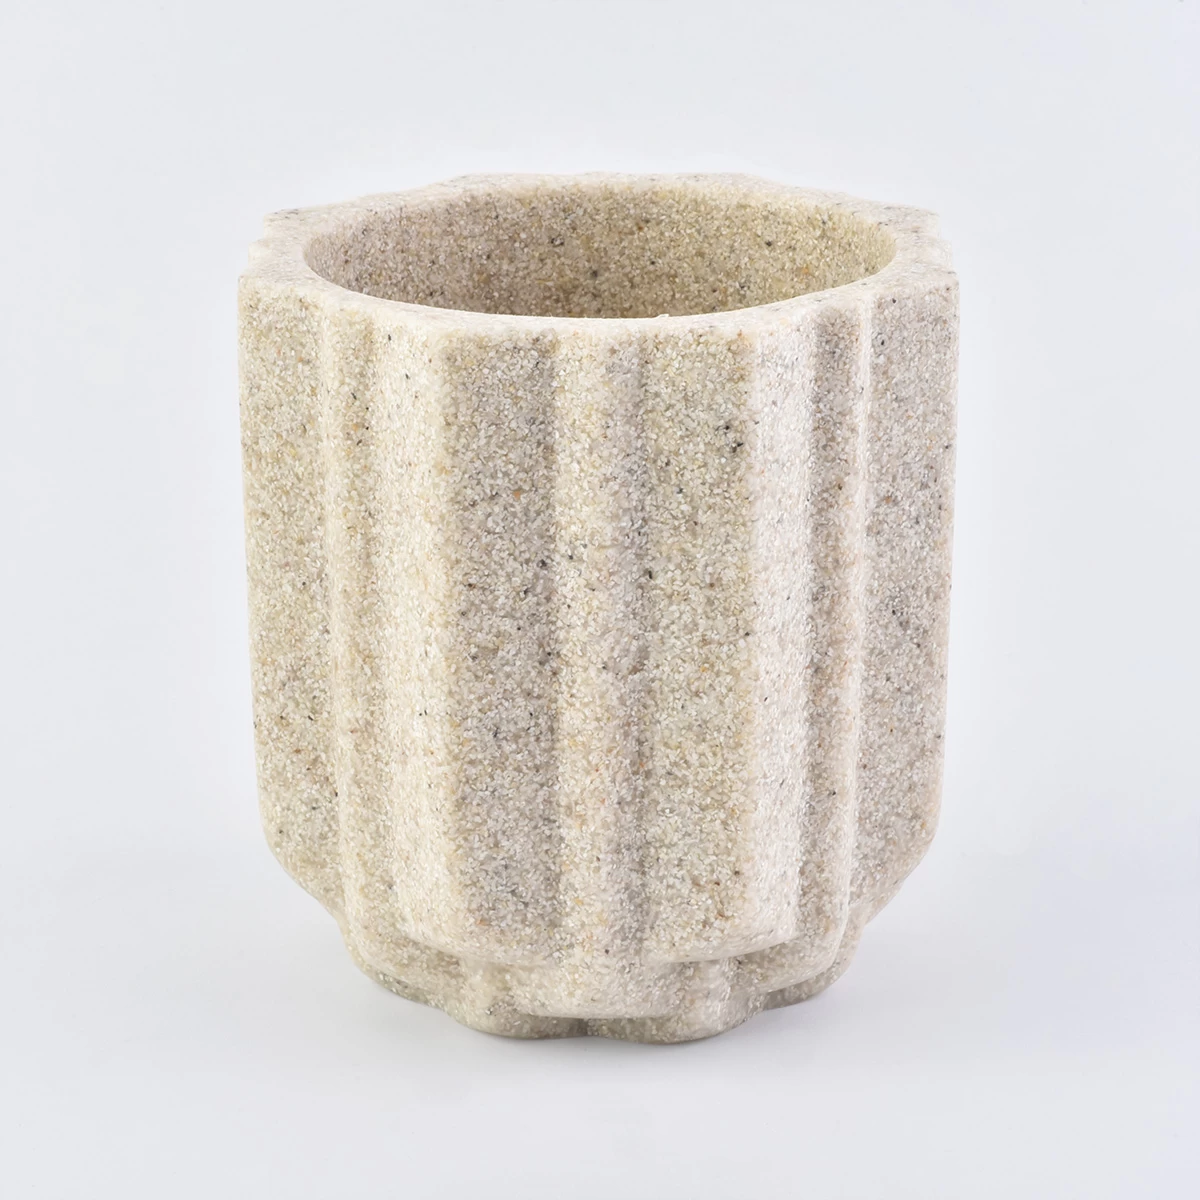 Sunny designed luxury cement concrete candle jars